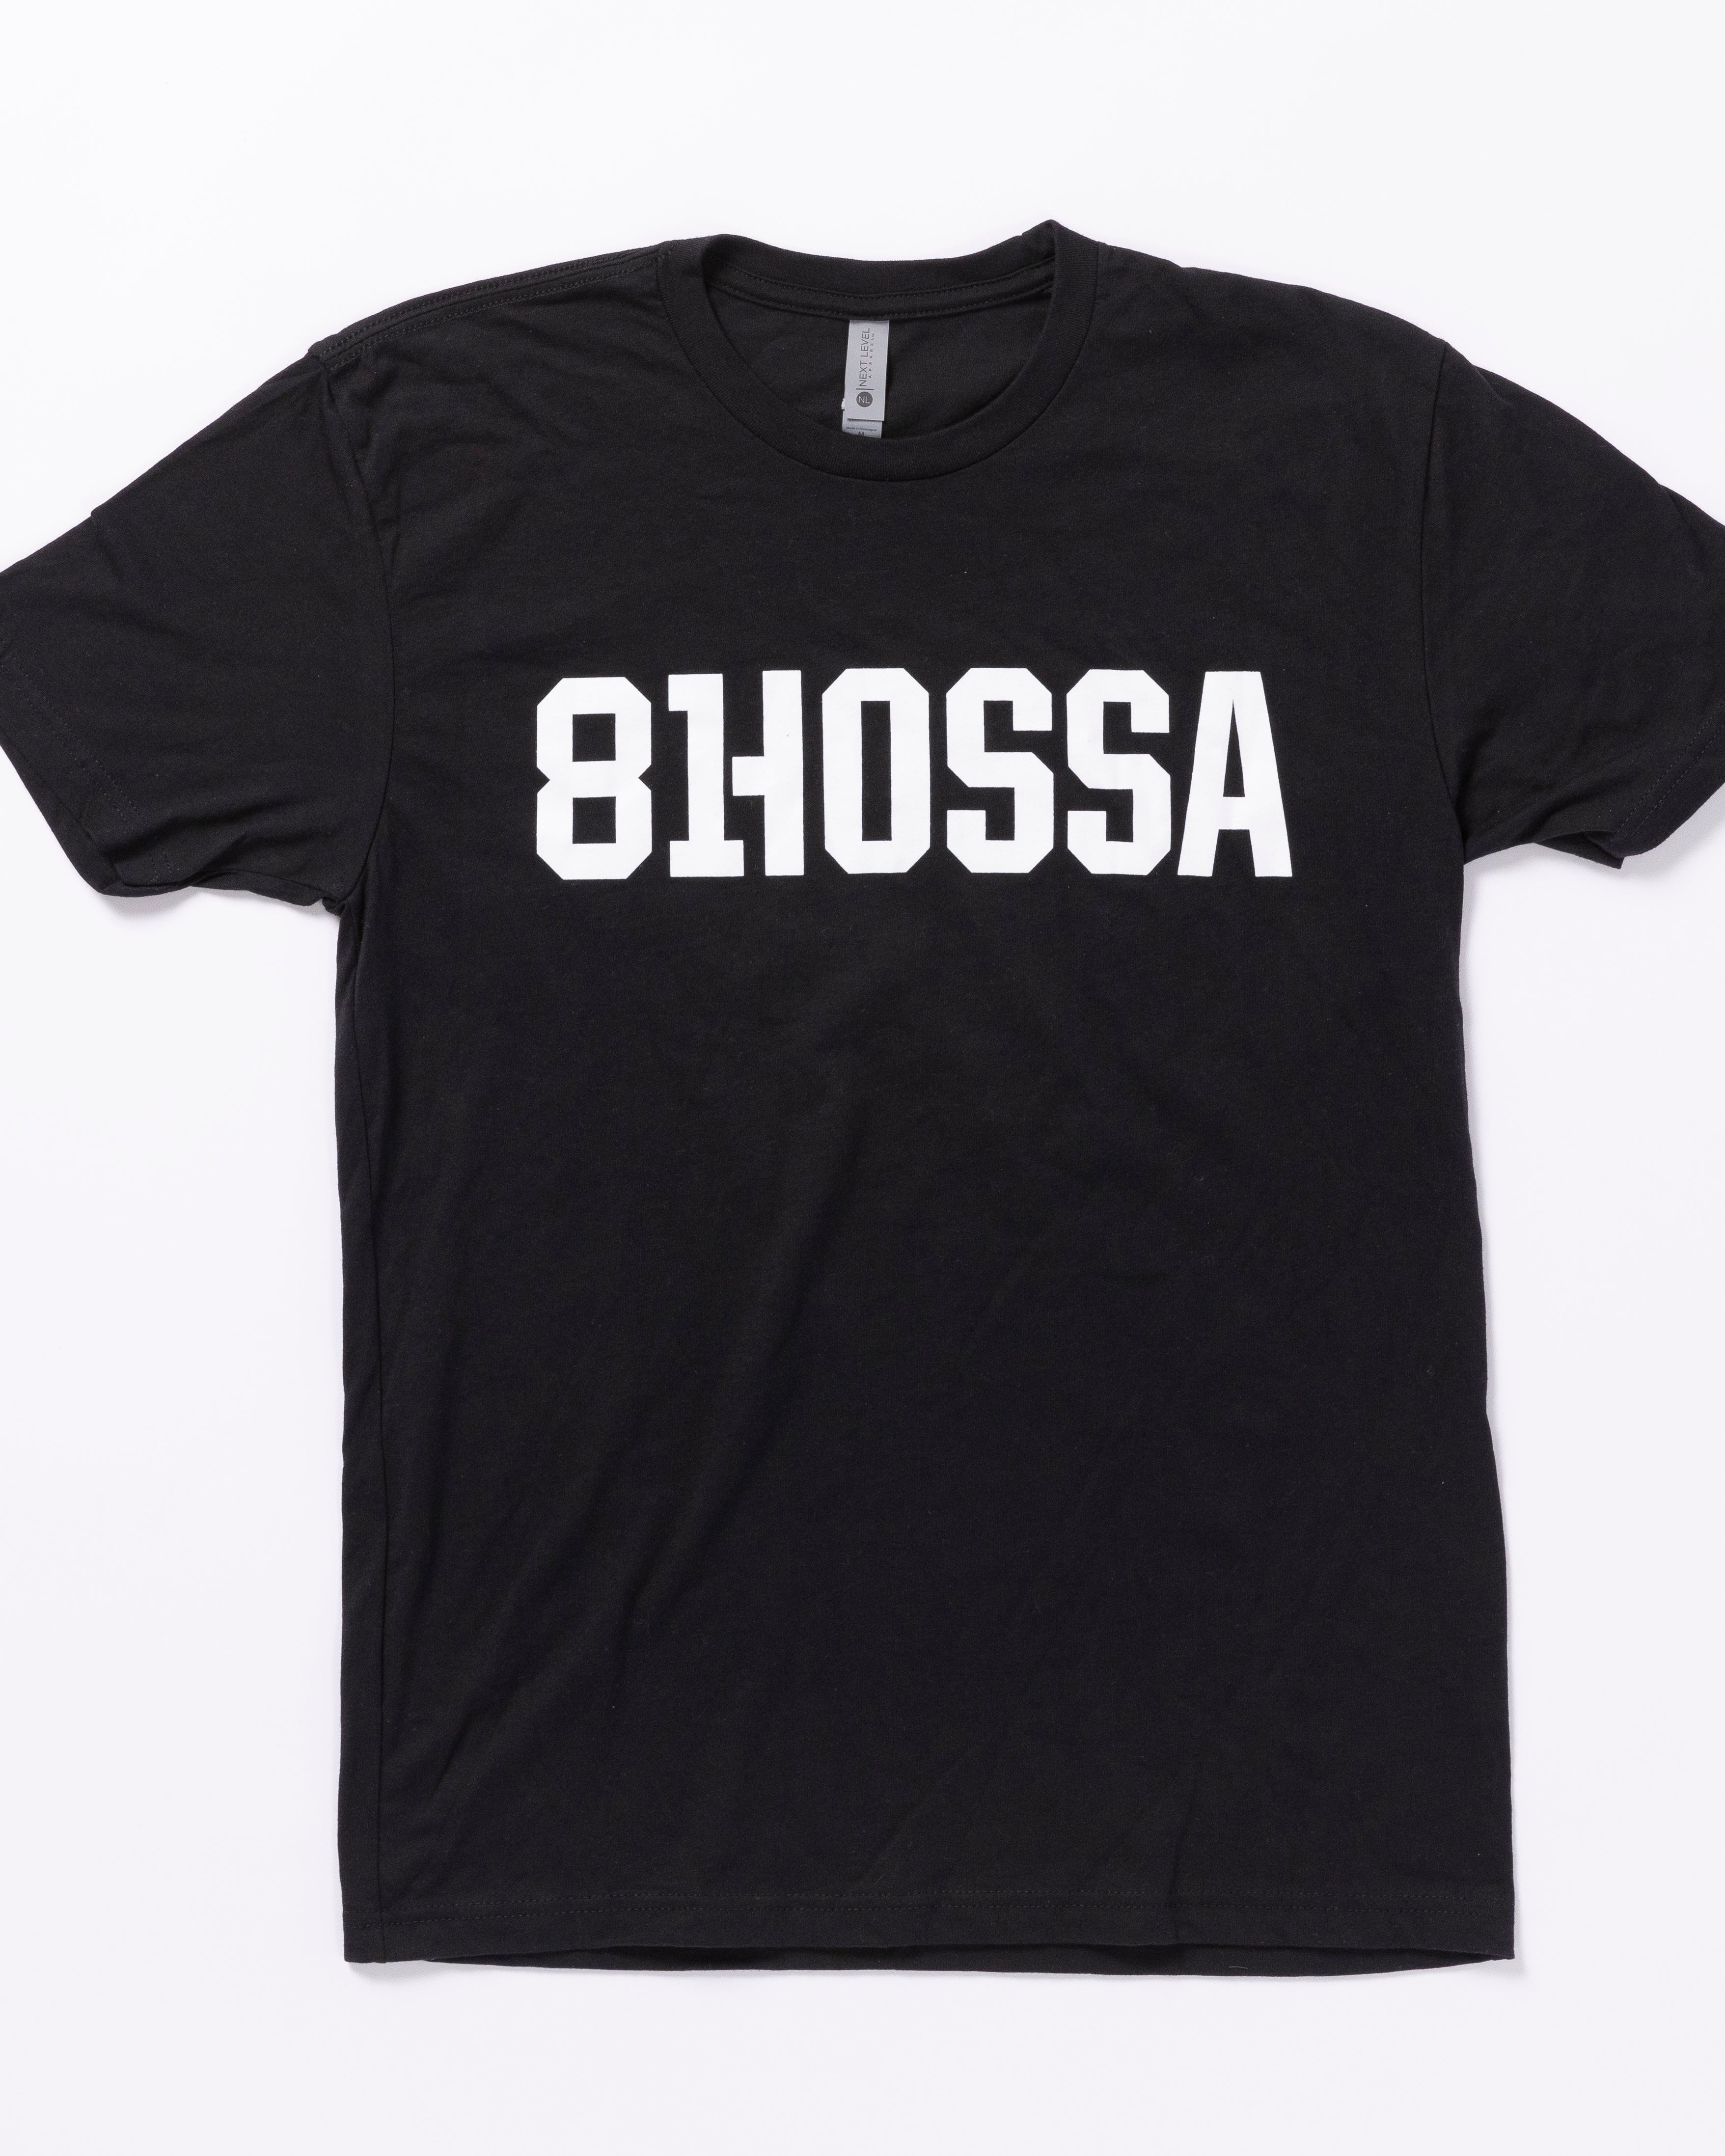 Marian Hossa Shirt Graphic Sport Tshirt Player Best Seller -  Israel